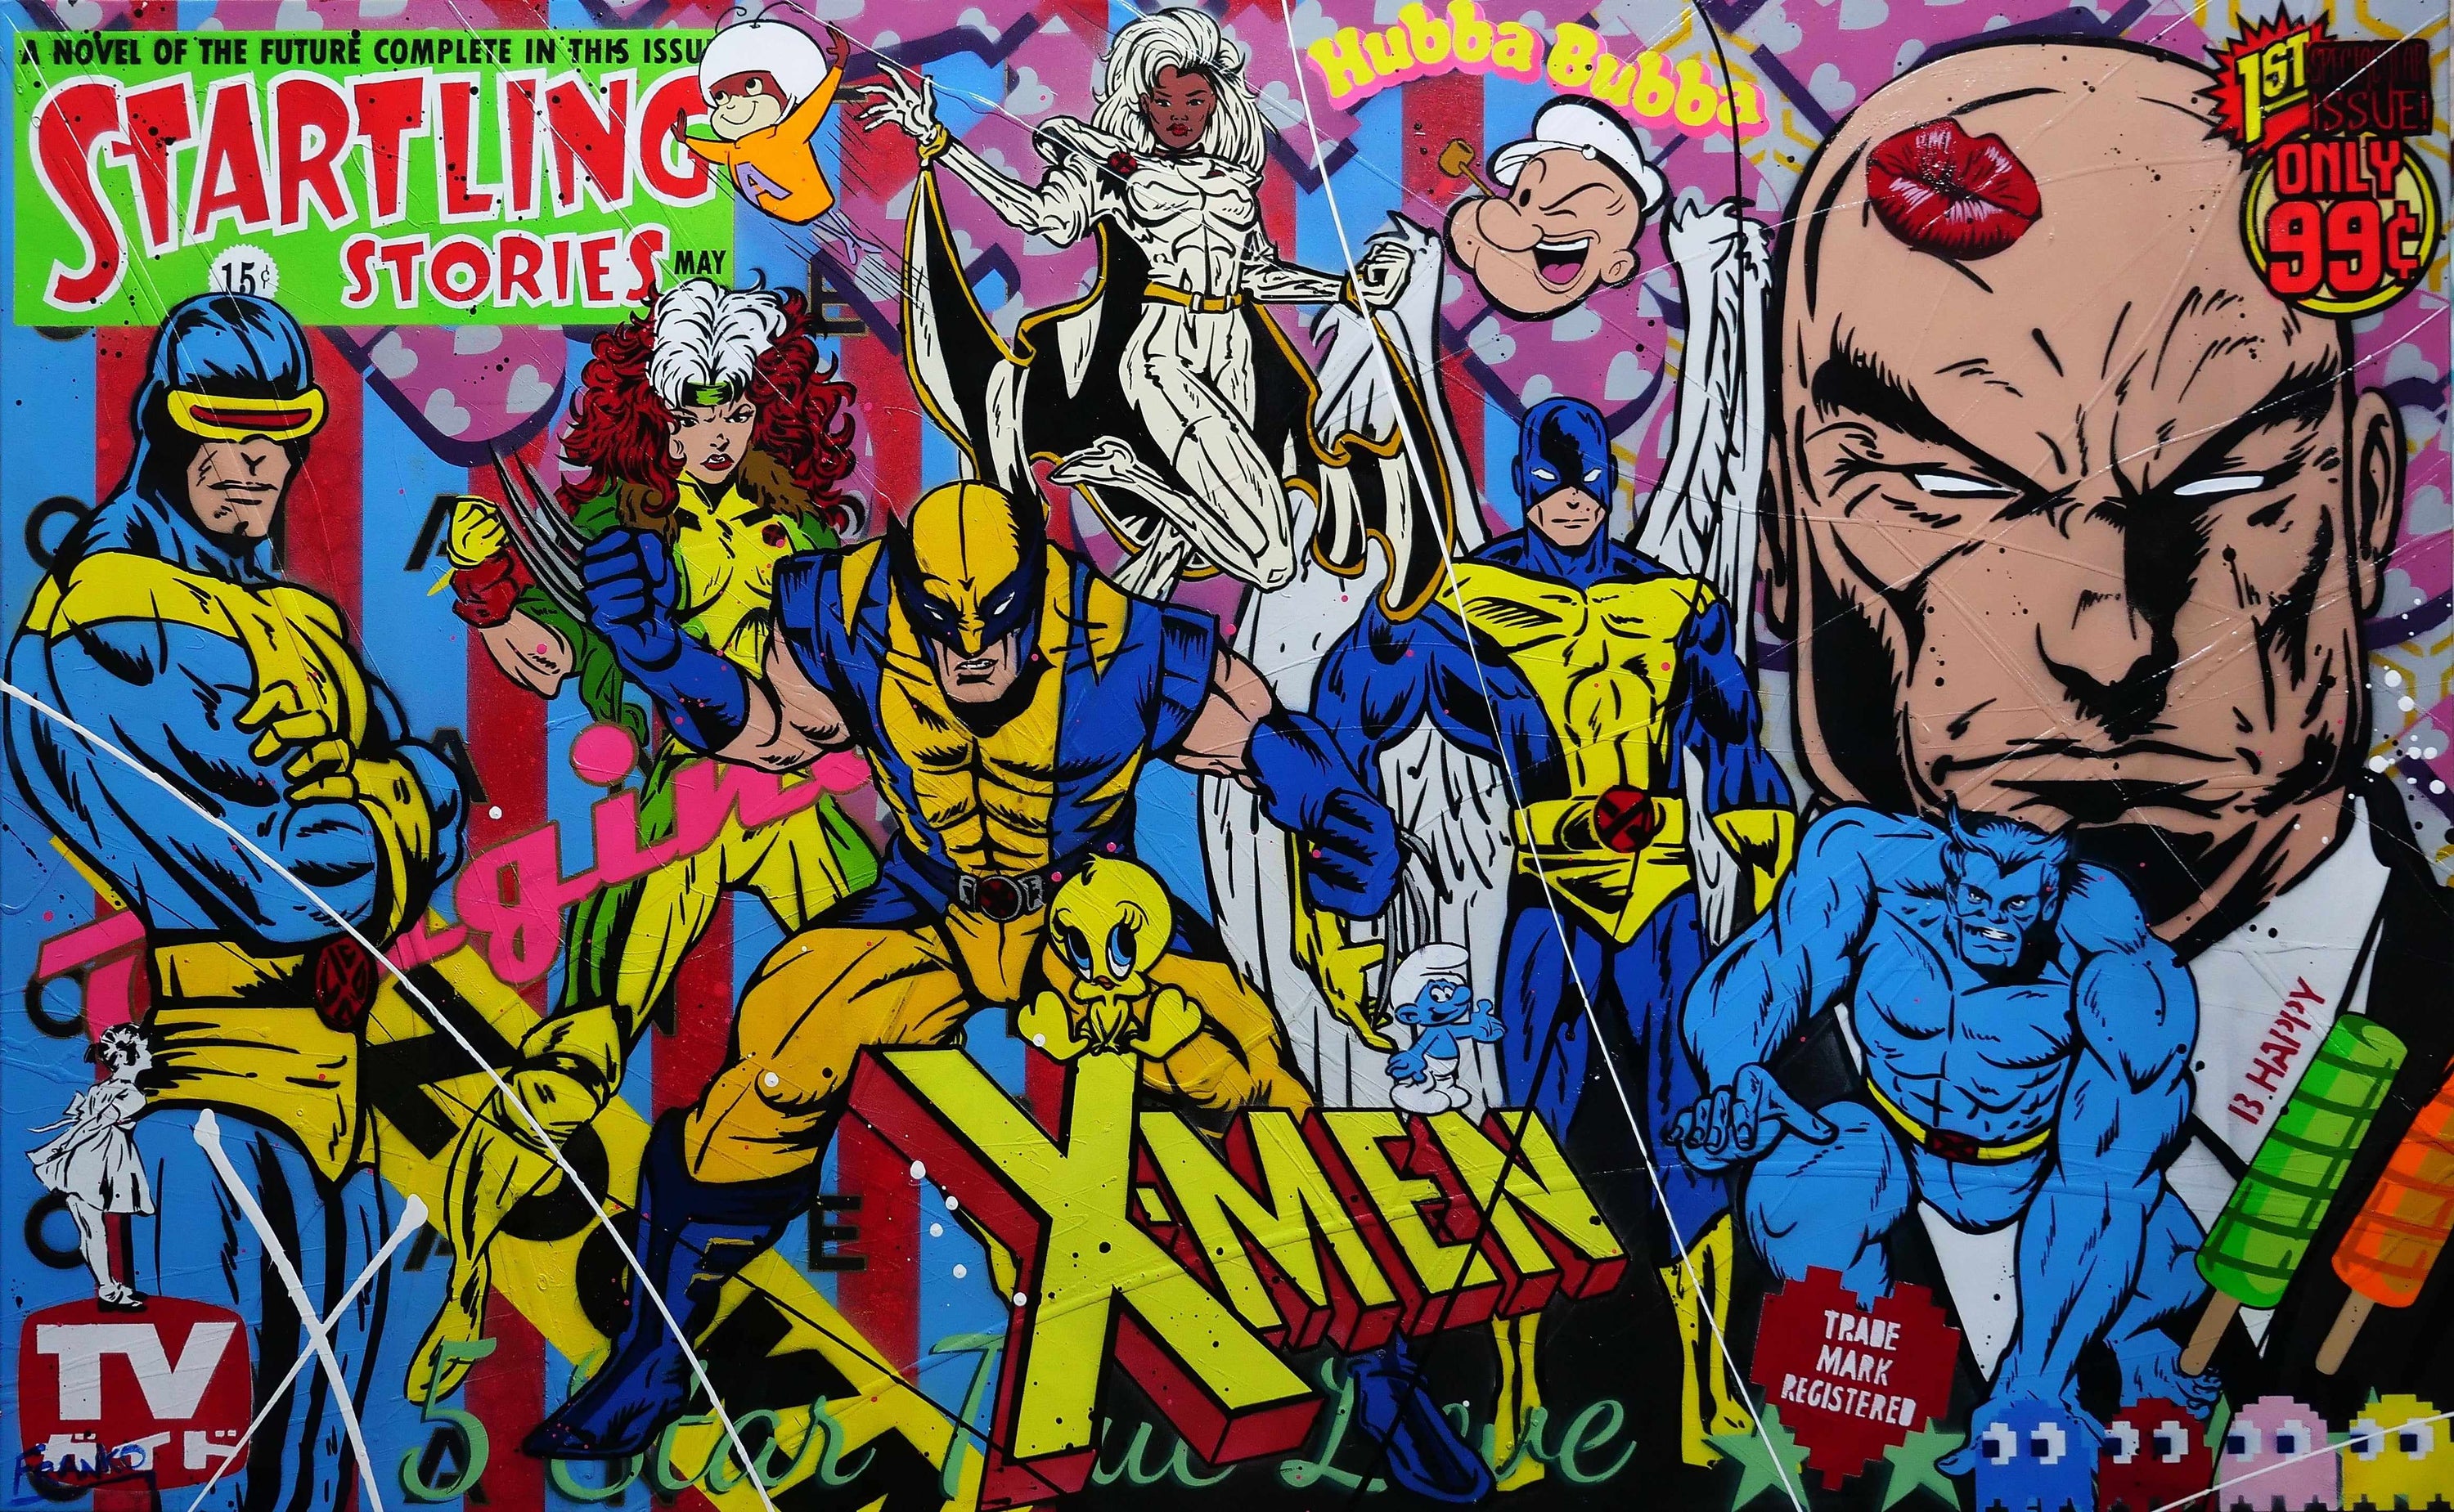 The Uncanny X-Men 160cm x 100cm X-Men Textured Urban Pop Art Painting (SOLD)-Urban Pop Art-Franko-[Franko]-[Australia_Art]-[Art_Lovers_Australia]-Franklin Art Studio